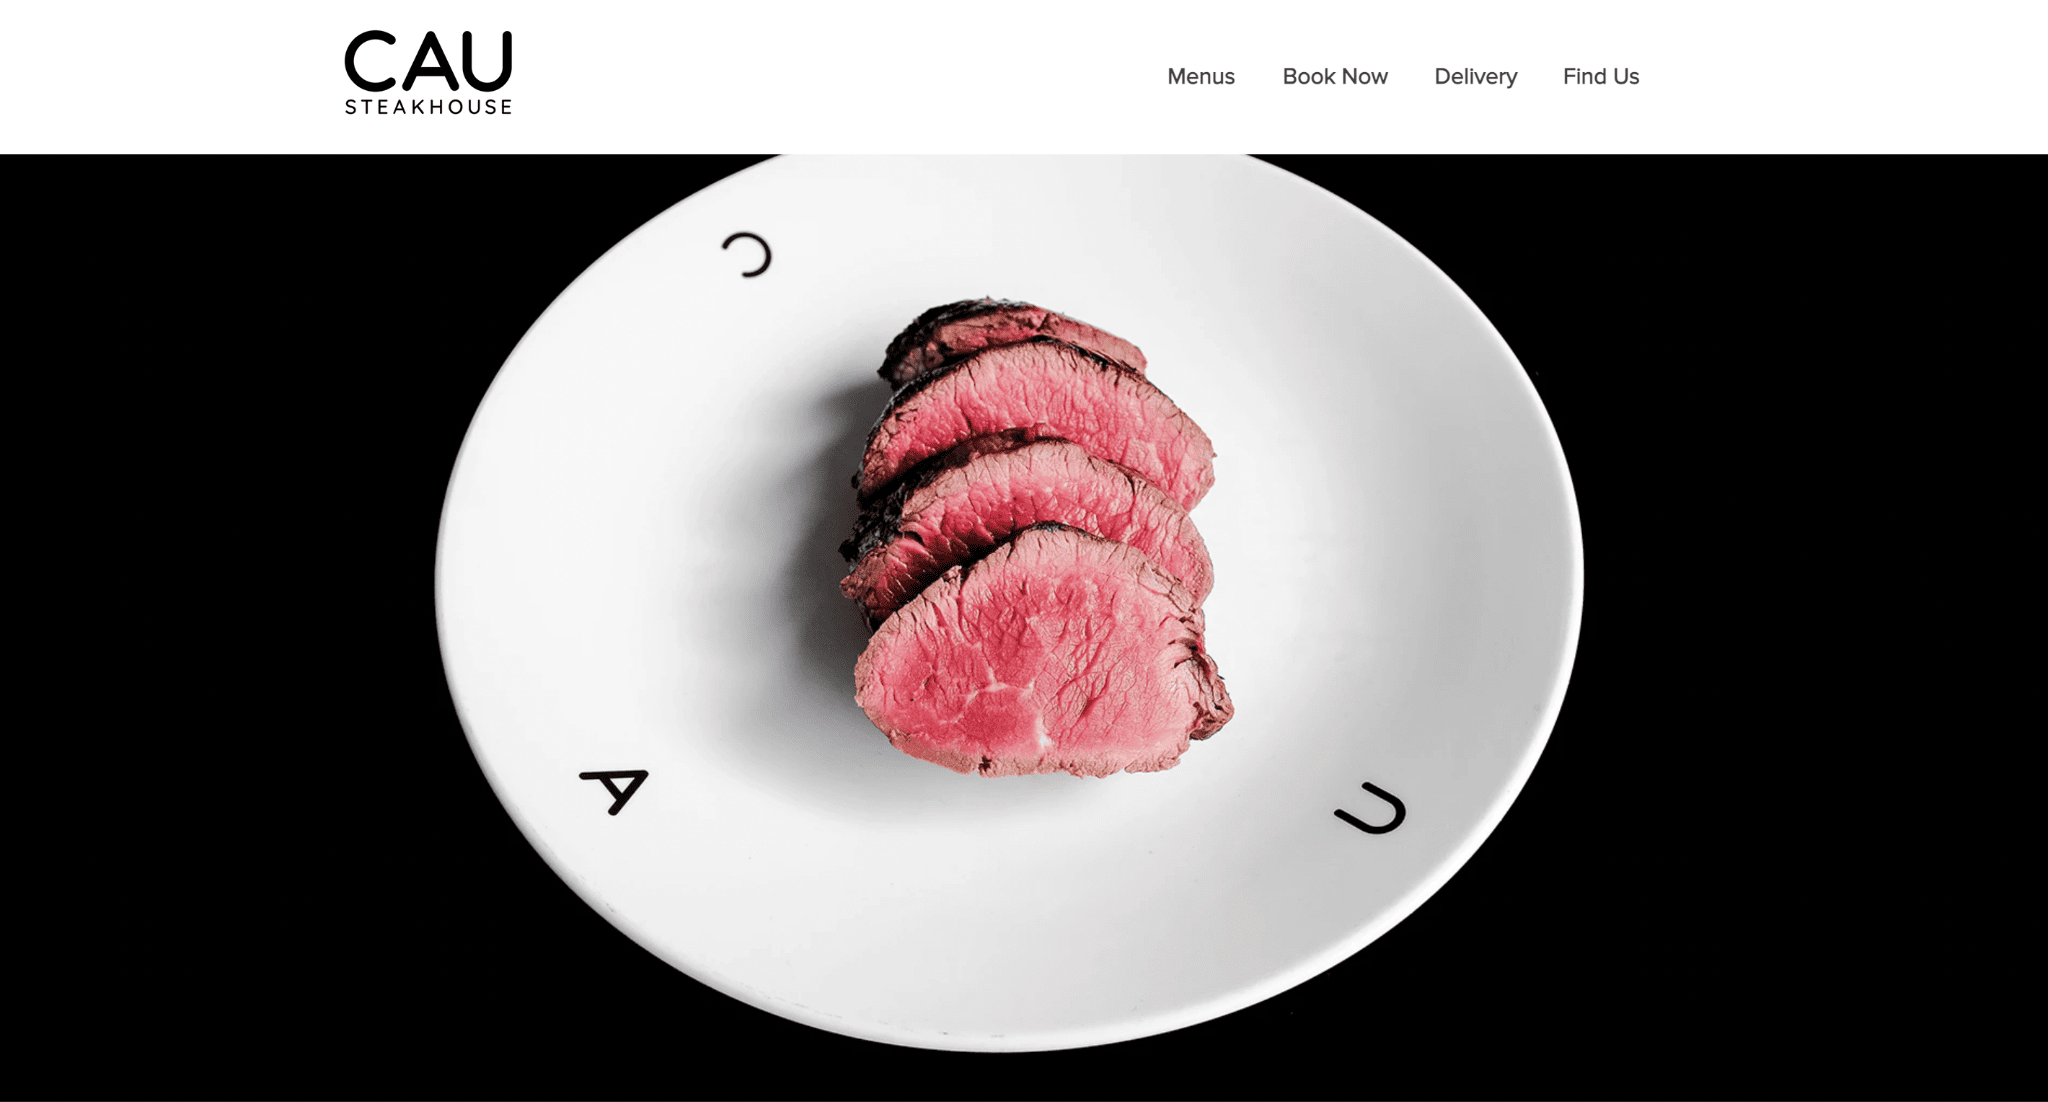 wix restaurant website - cau